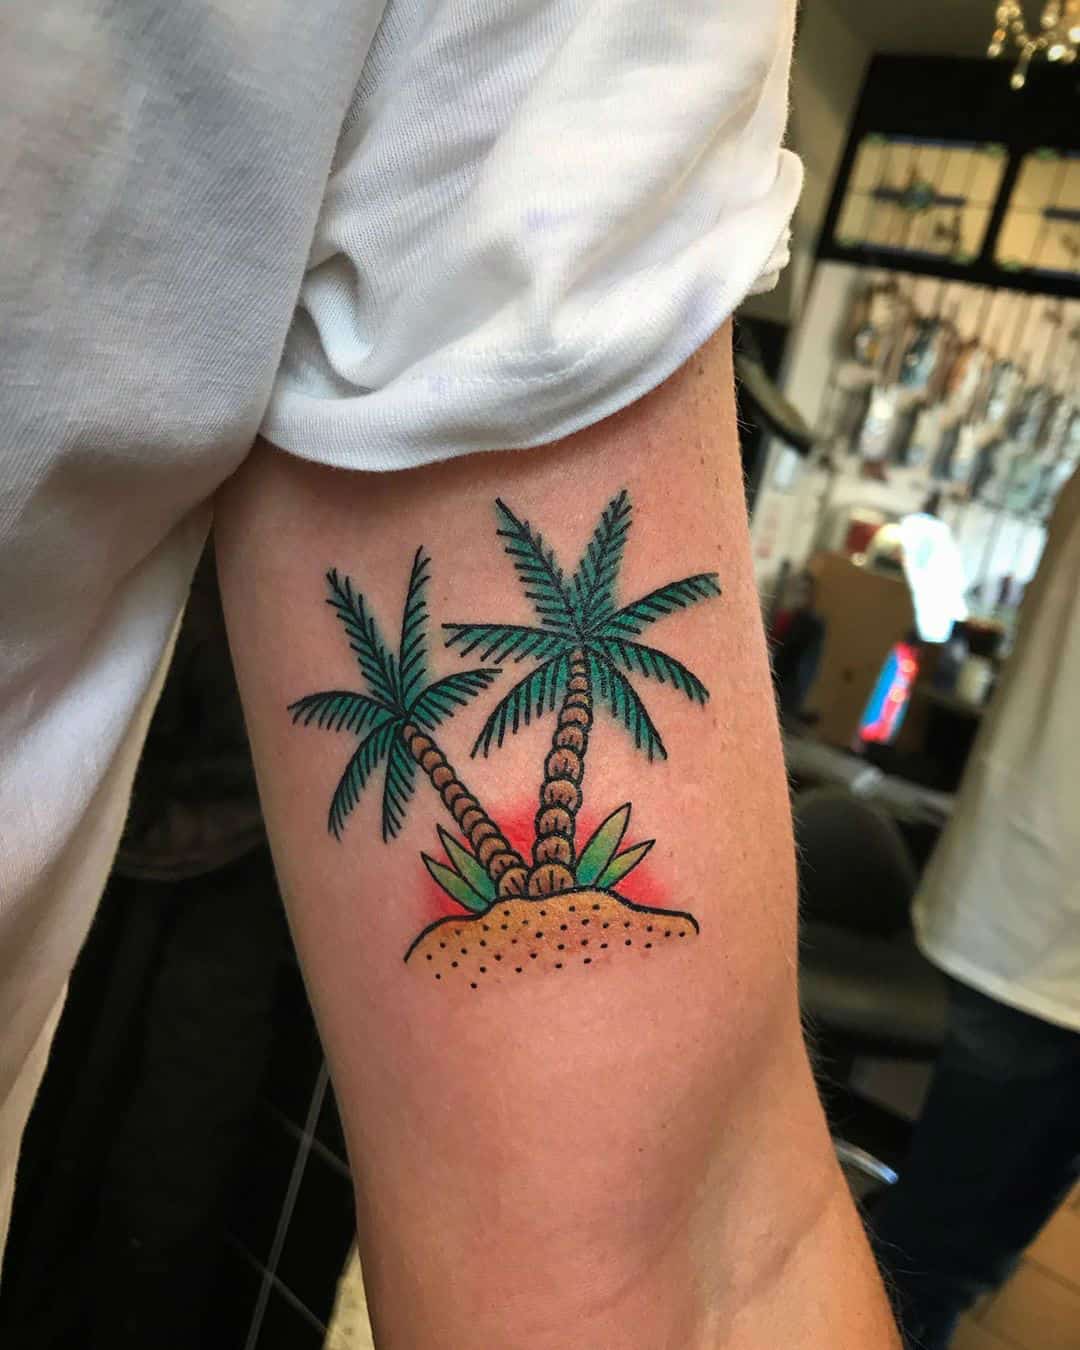 Trending Tattoo on Twitter Colorful Palm Tree tattoo on Wrist palmtrees  tattoo tattooart httpstcoiJJwy5CWl3 httpstcoyeBljheFaf  Twitter